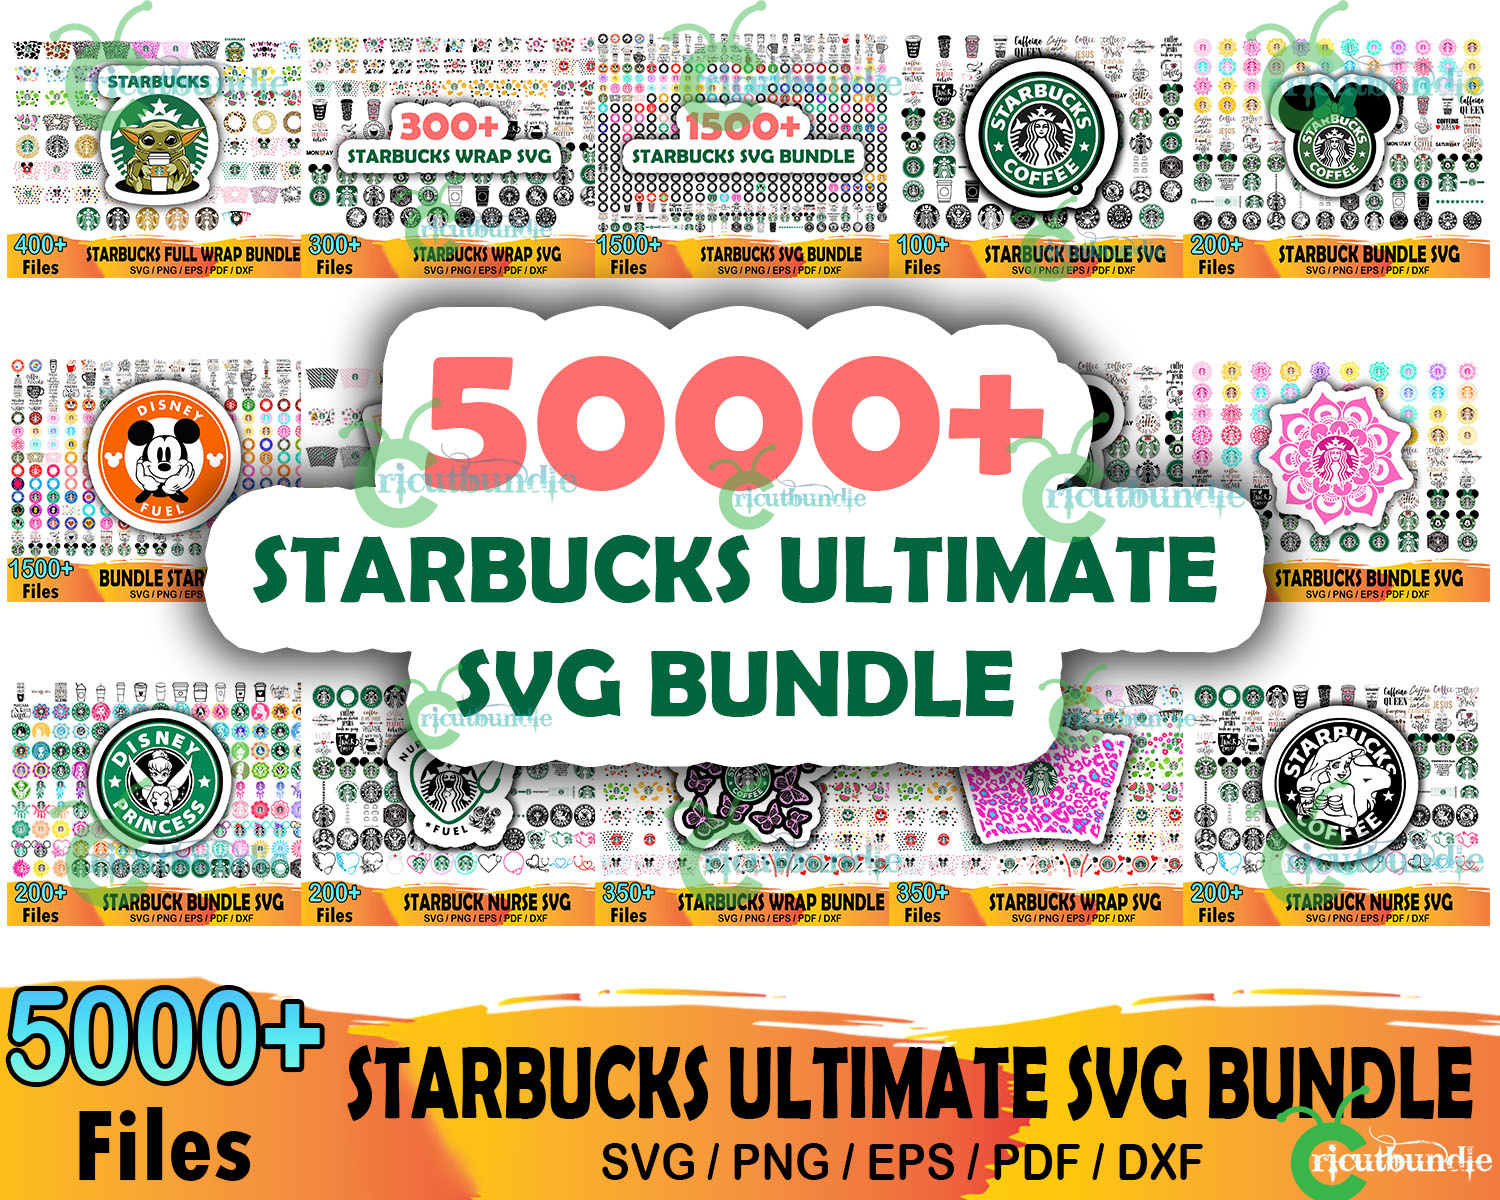 Louis Vuitton SVG Cut File - Seamless Full Wrap For Starbucks